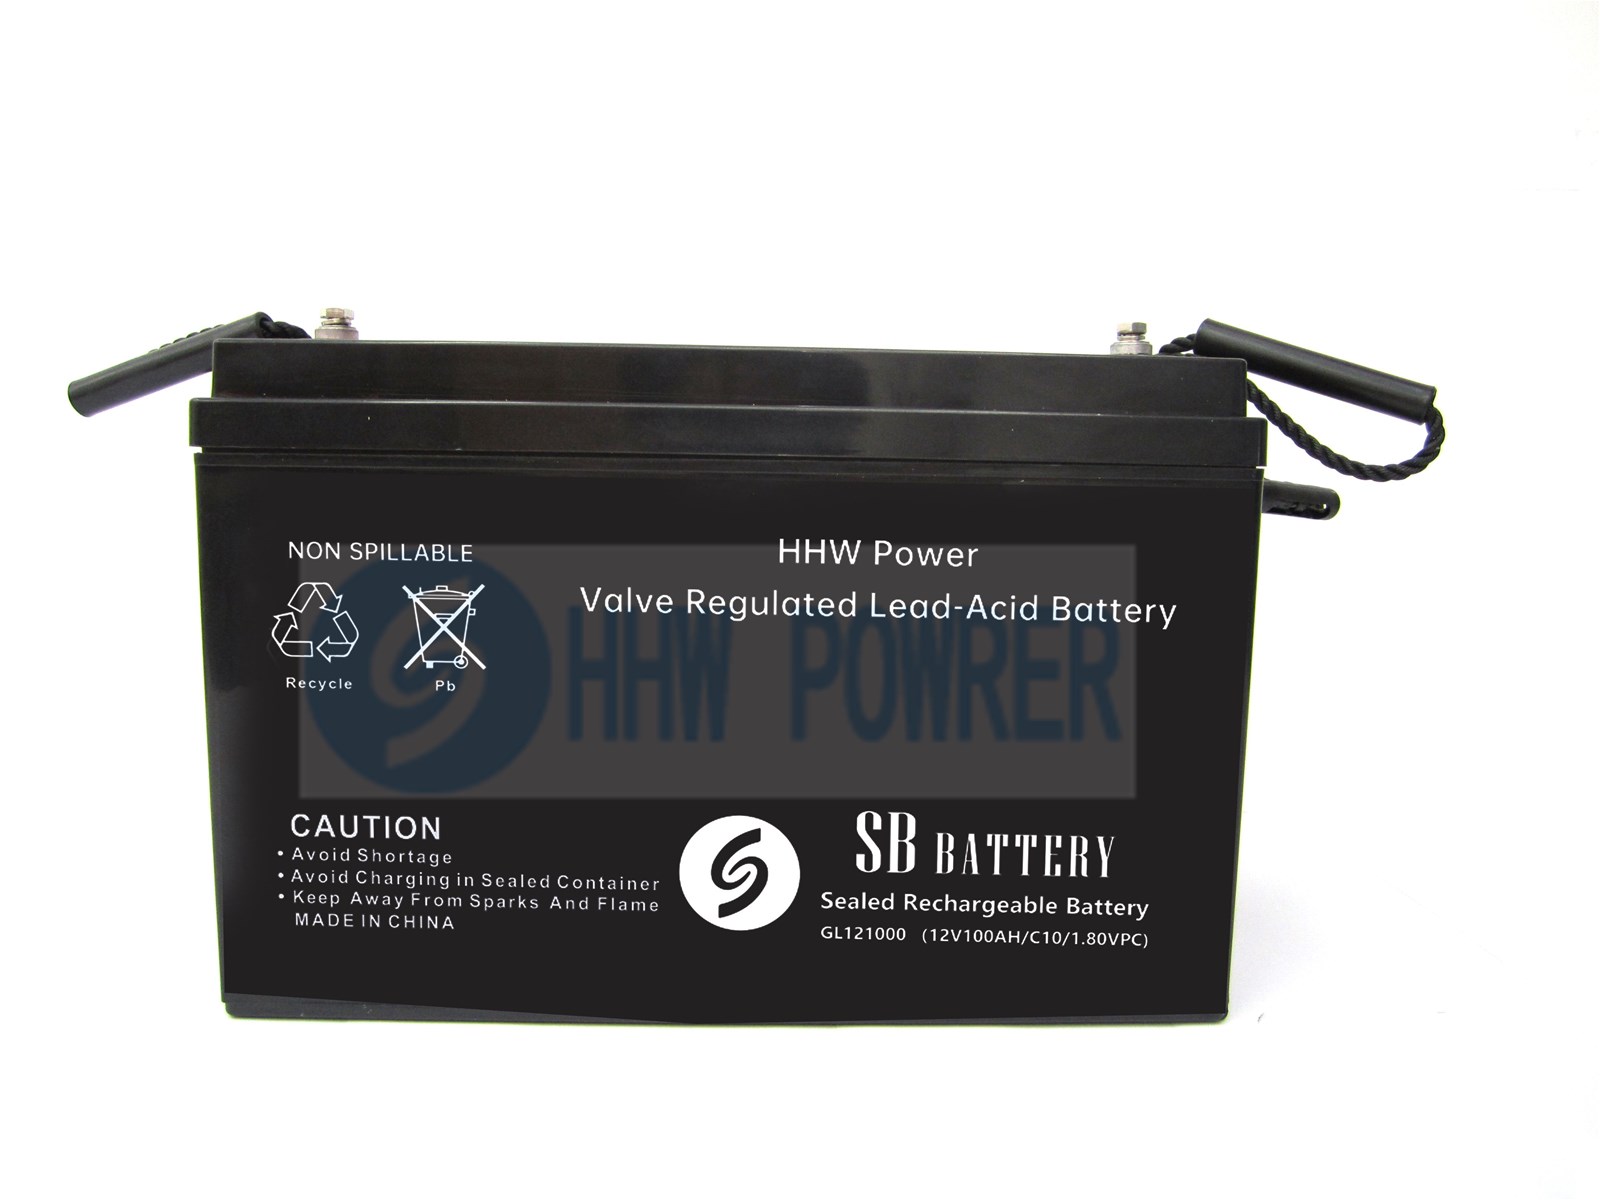 12v100ah sealed lead acid batterymaintenance free for ups and solar power system applications